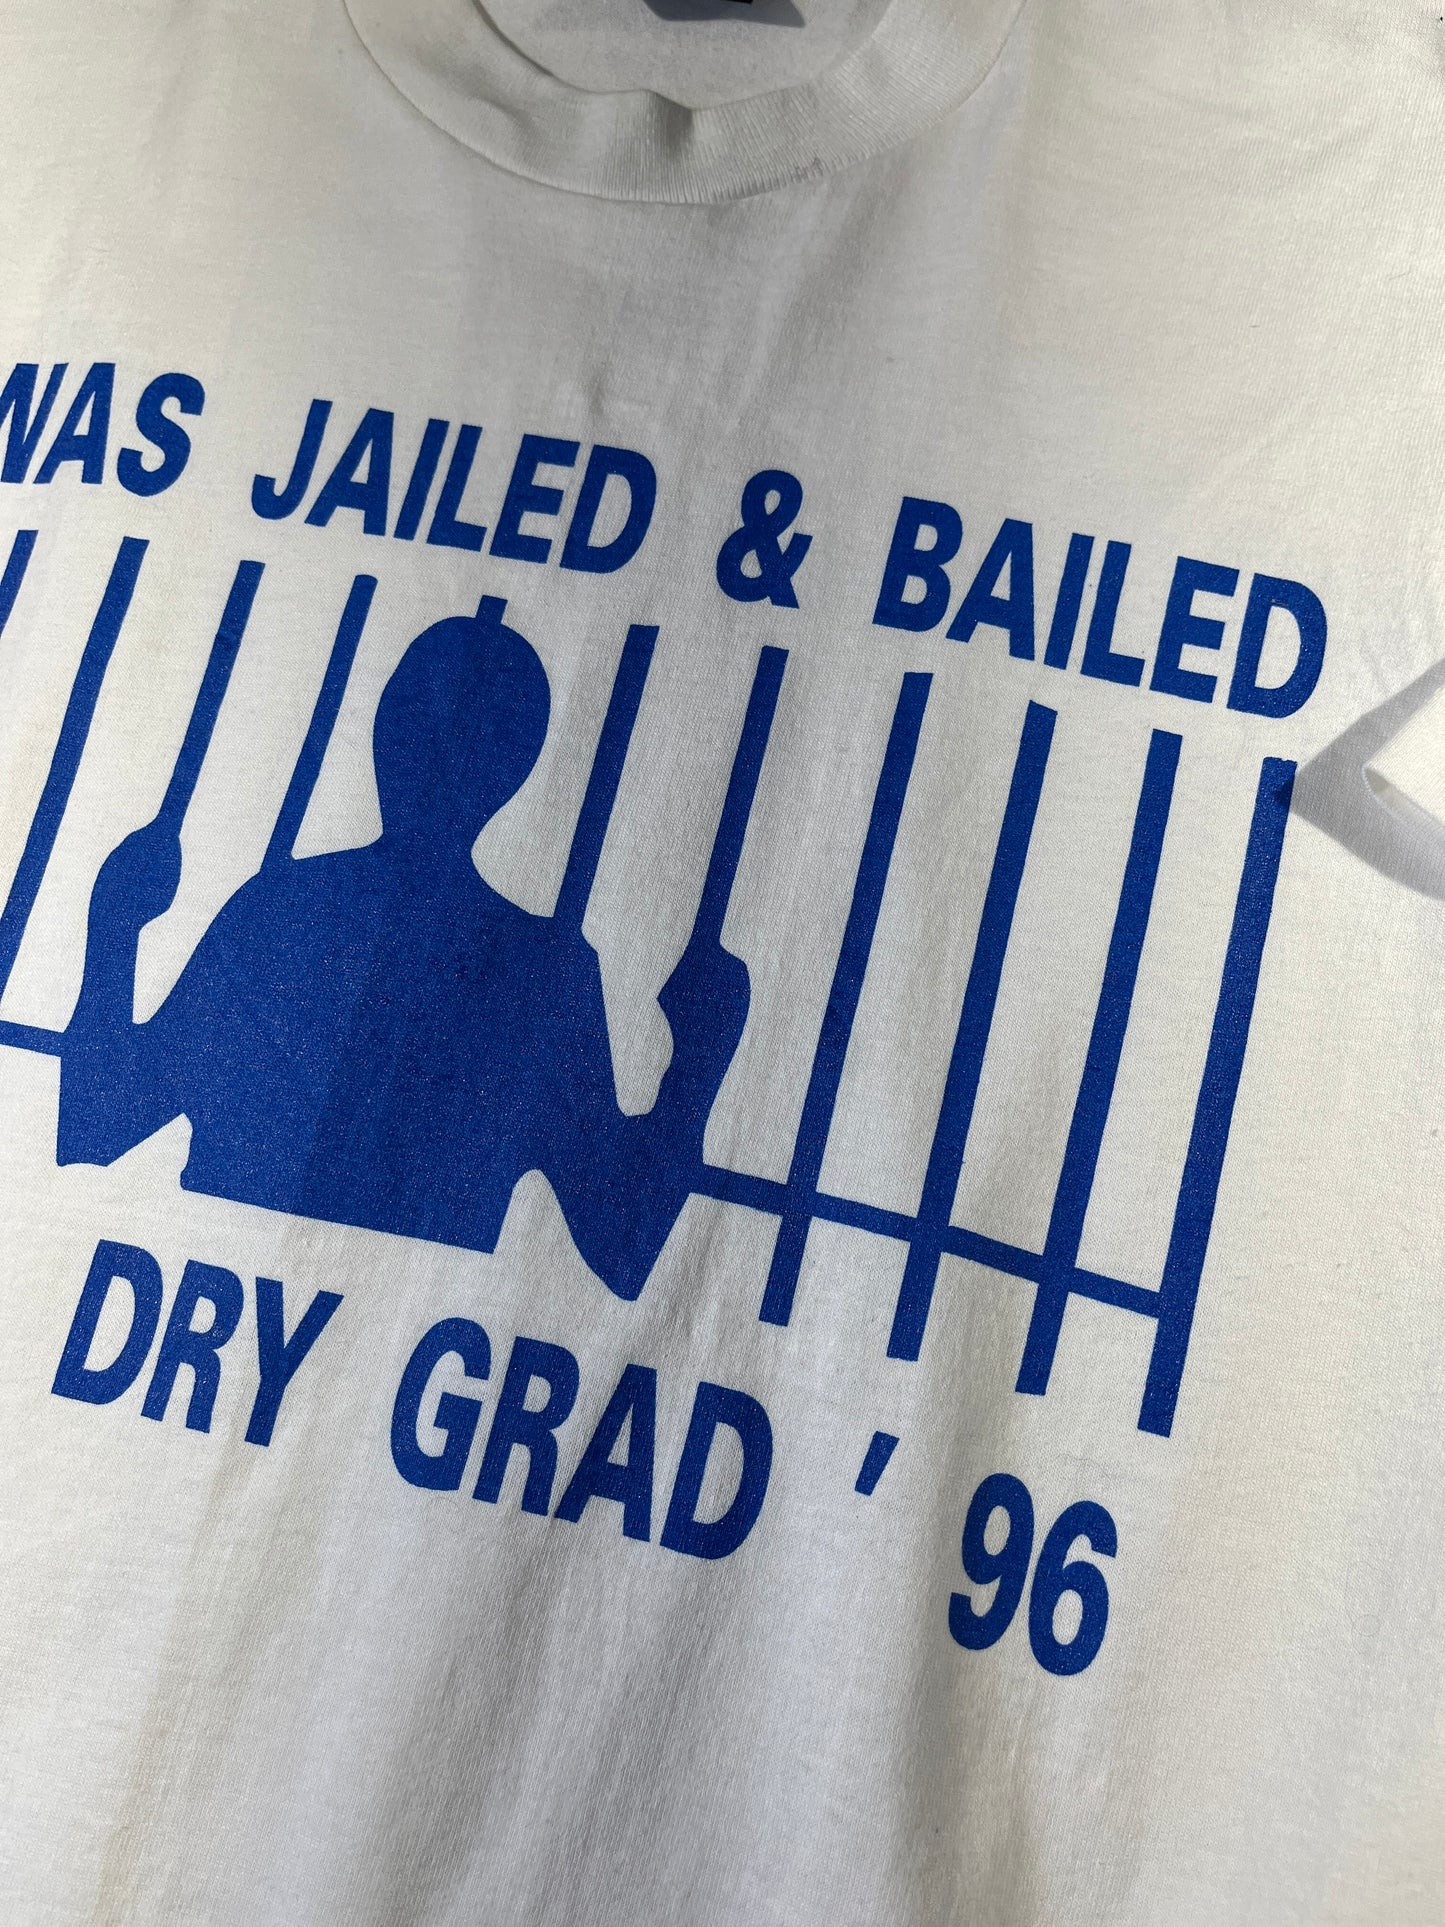 Vintage Jailed & Bailed T-Shirt 1996 DRY Grad